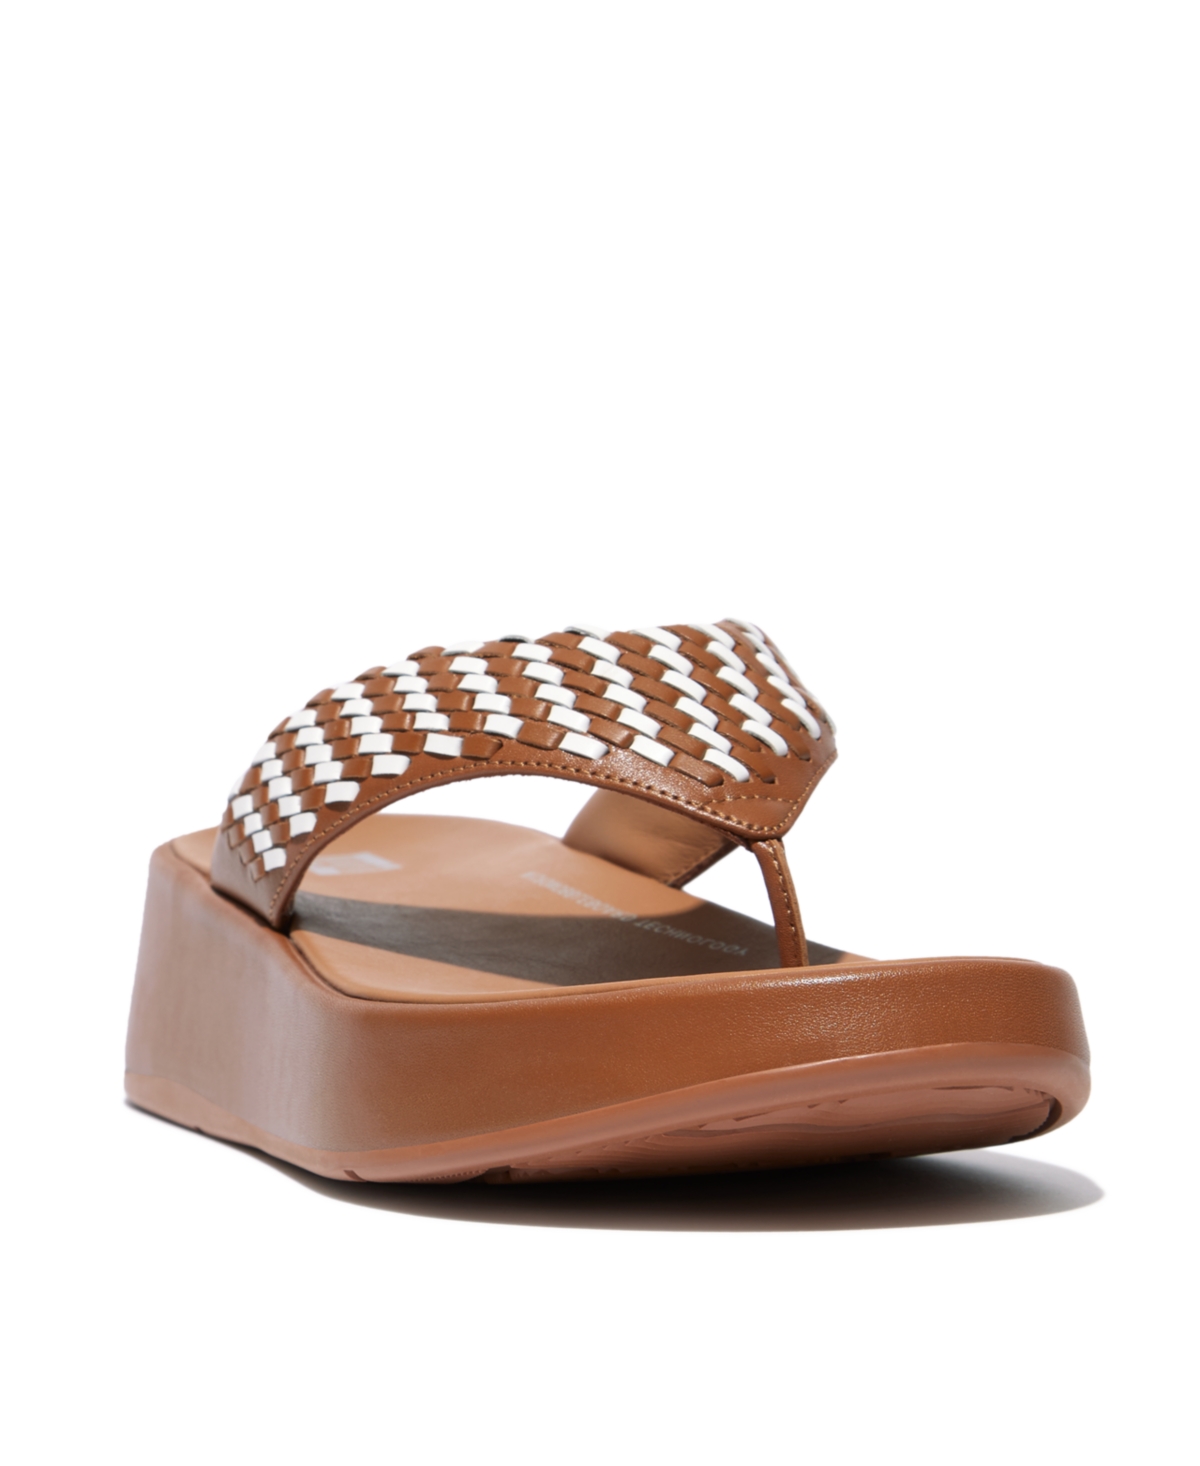 Women's F-Mode Woven-Leather Flatform Toe-Post Sandals - Light Tan